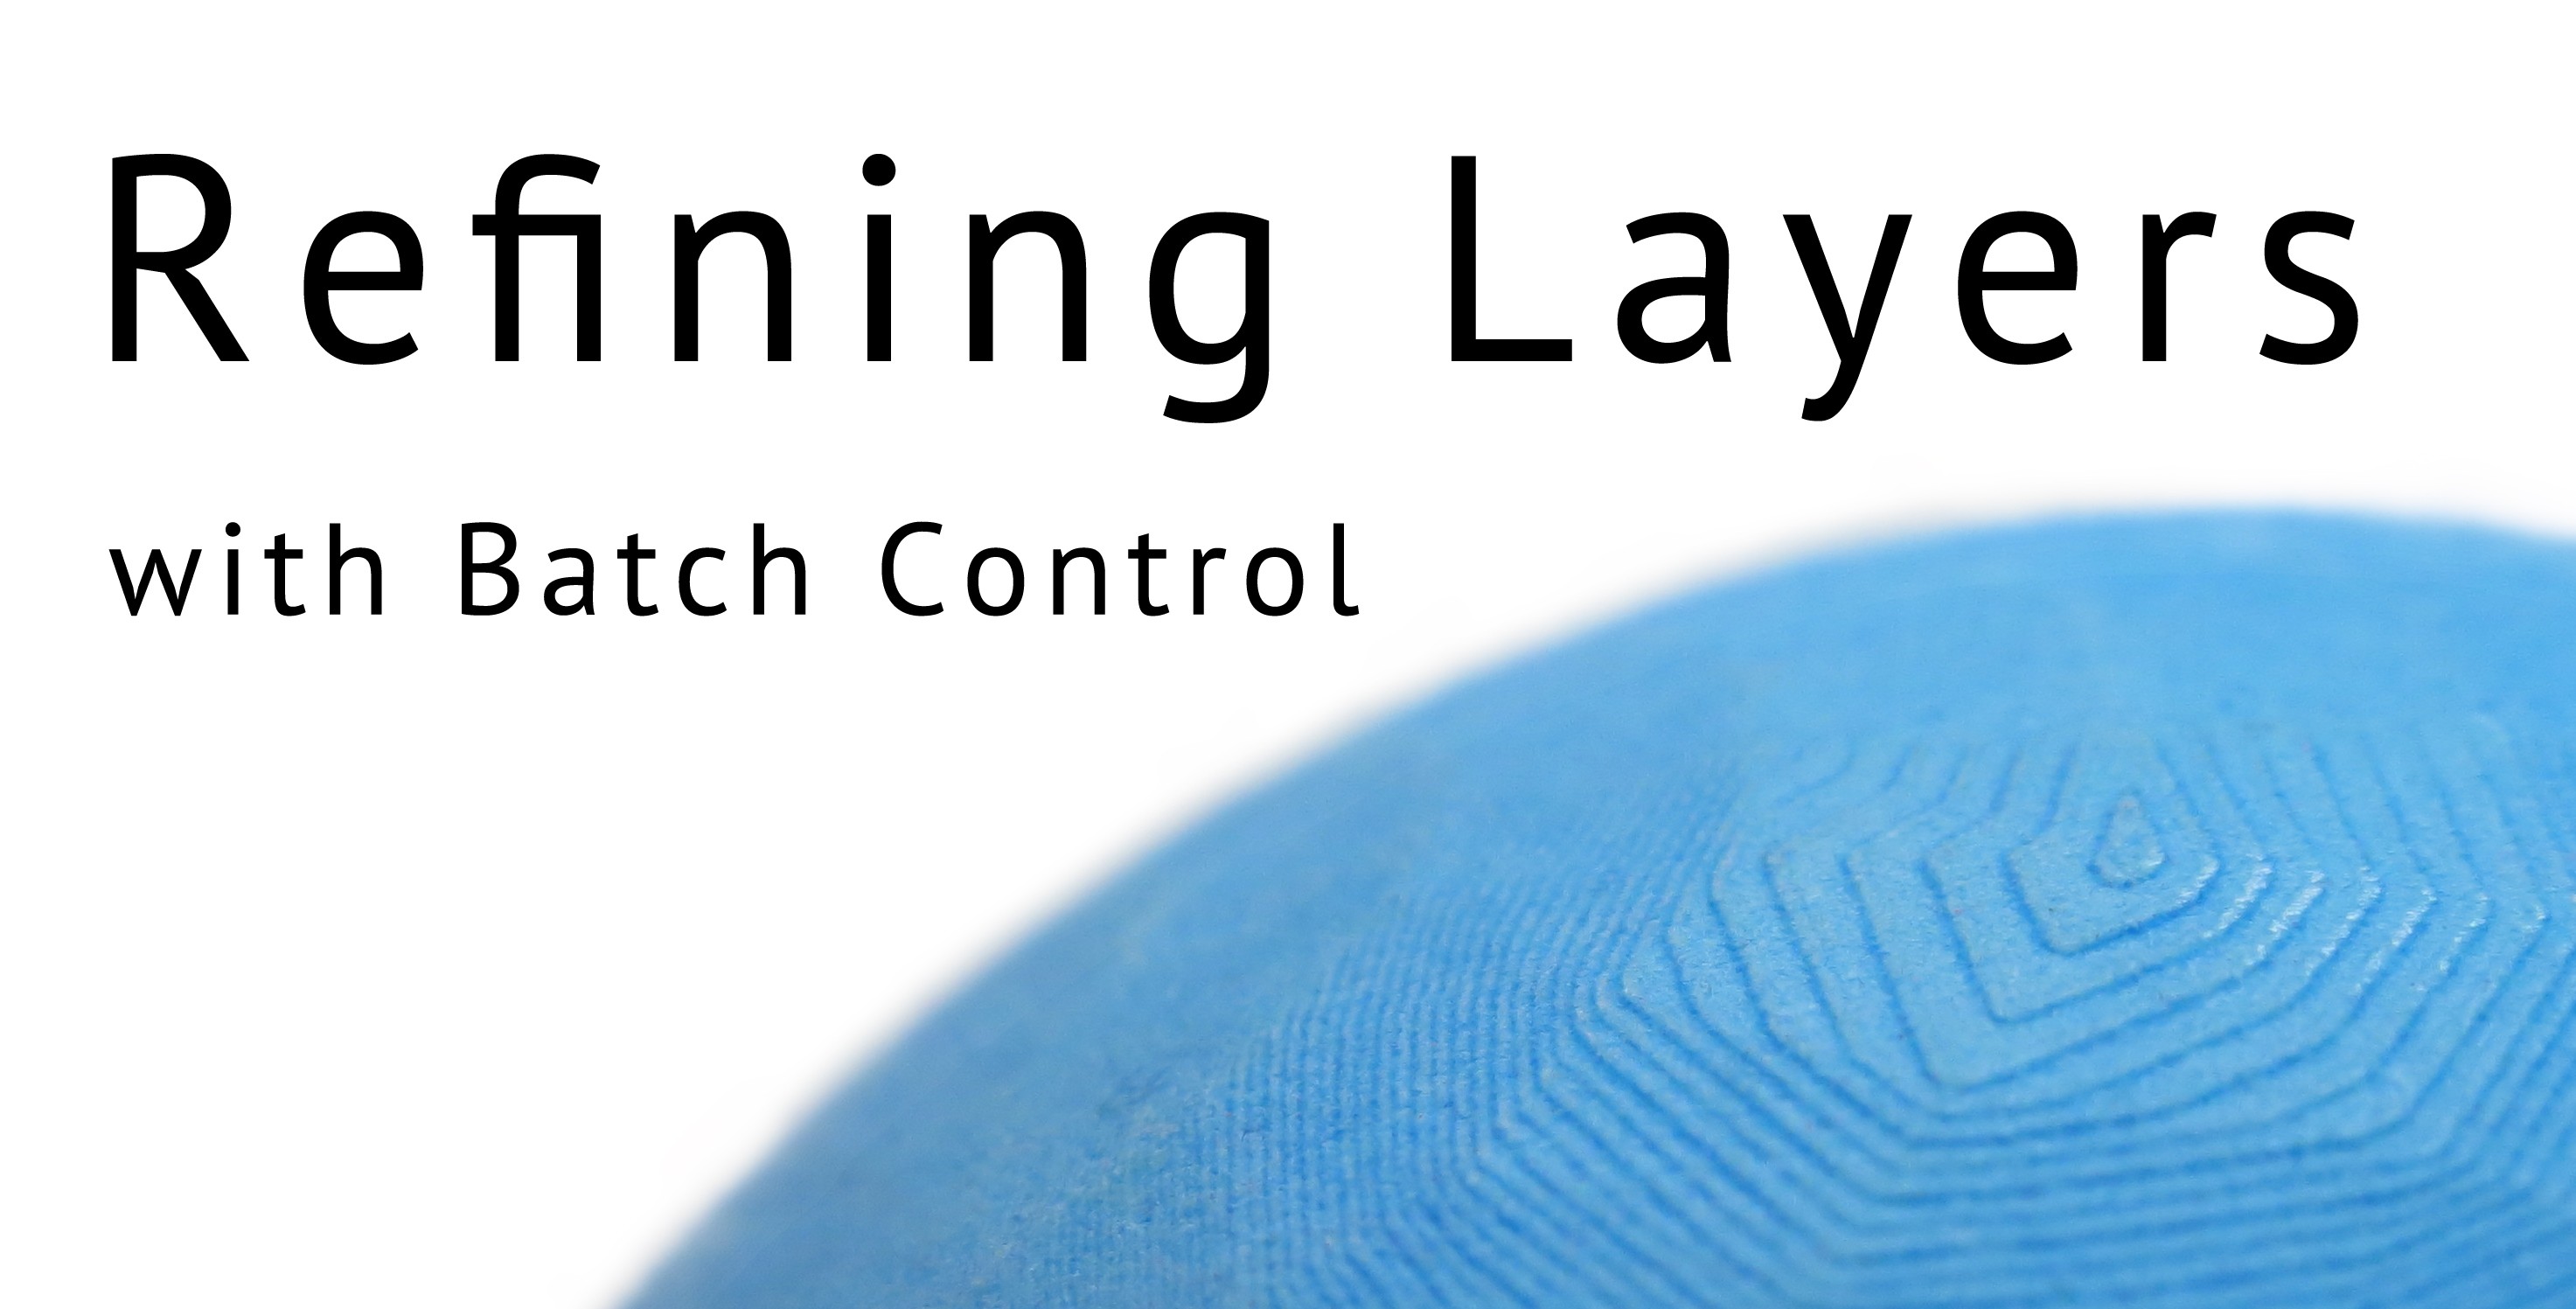 Refine layers using Batch Control